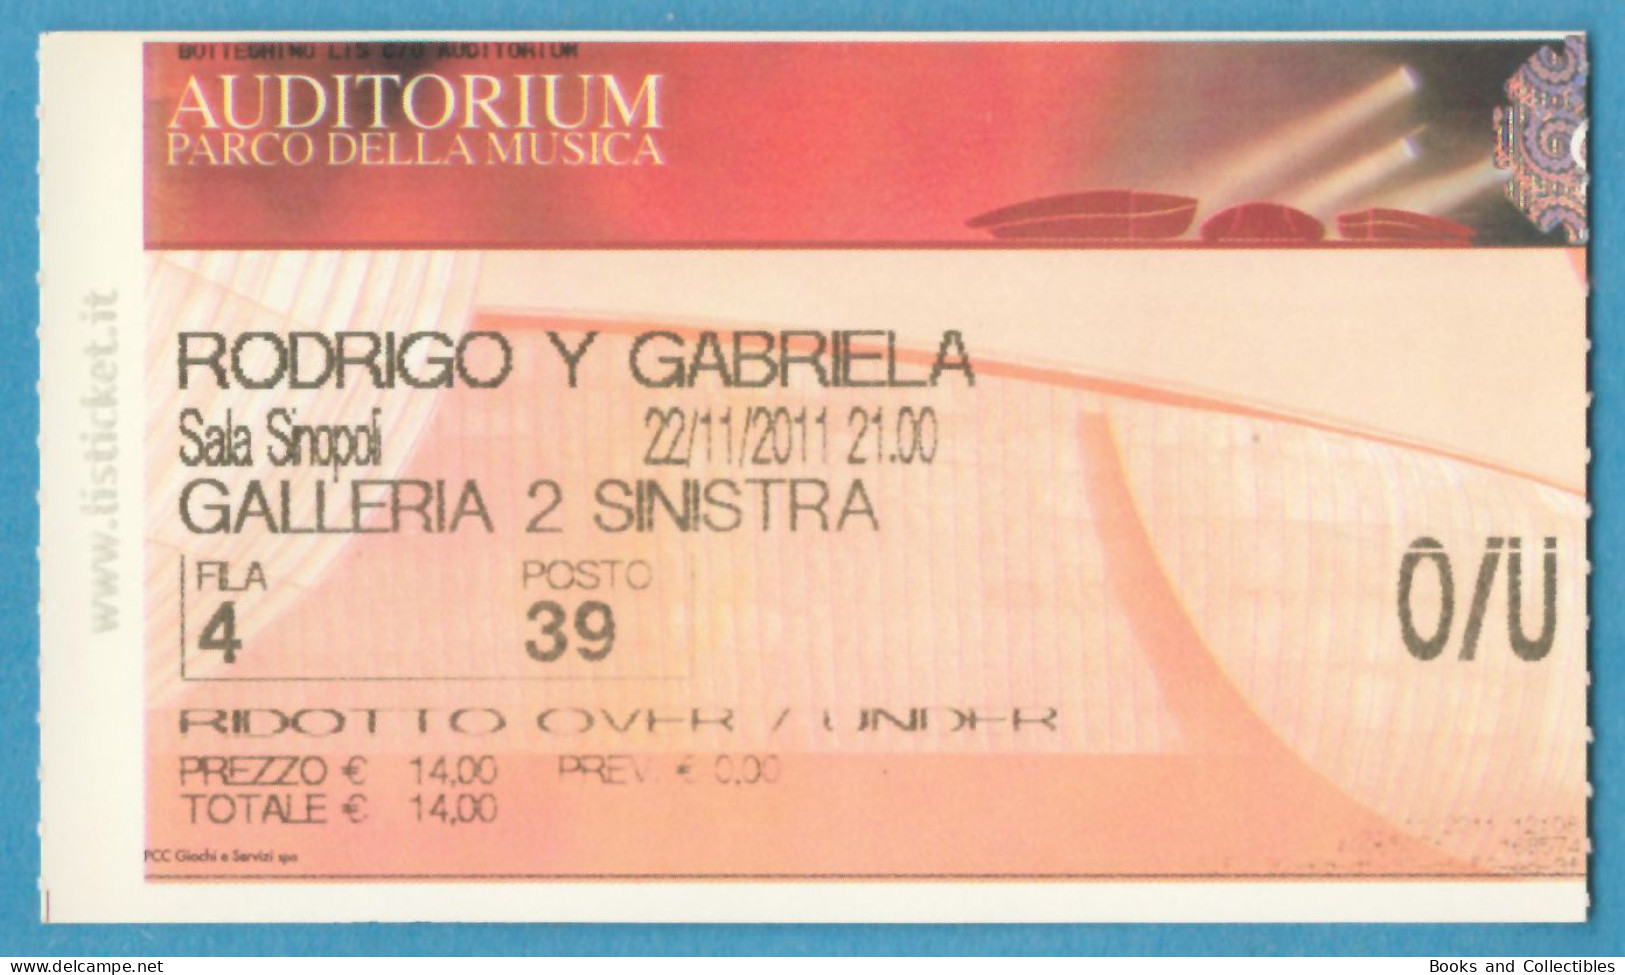 Q-4500 * RODRIGO Y GABRIELA - Auditorium Parco Delle Musica, Roma (Italy) - 22 Novembre 2011 - Concert Tickets